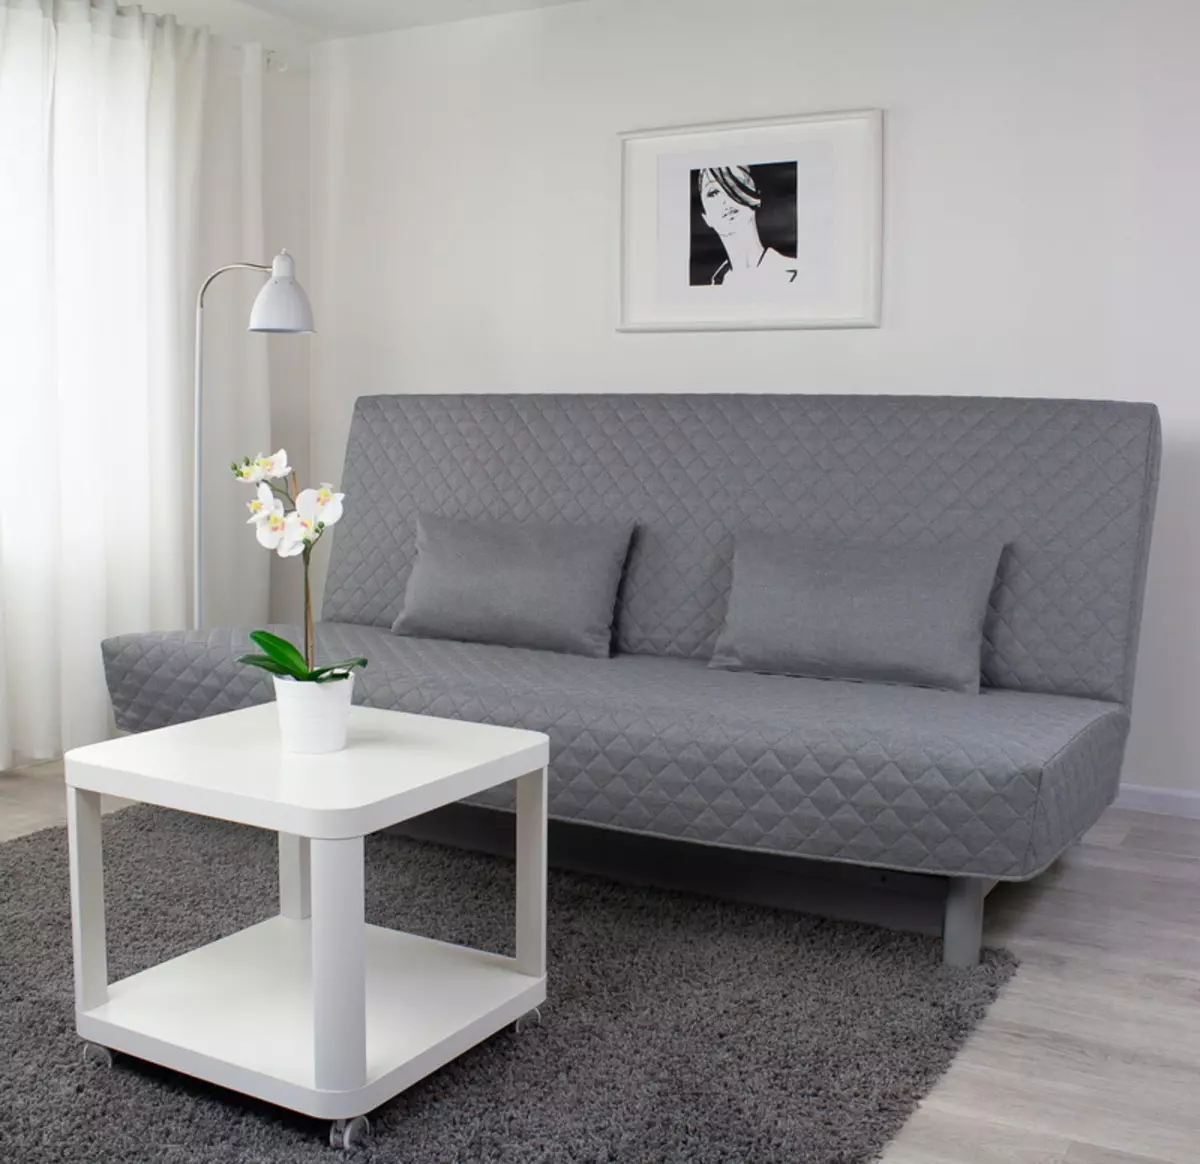 ସୋଫାବେଡ IKEA ଉପରେ କେସ୍: armrests ବିନା କଣ sofas ପାଇଁ bedspreads, ବିଶ୍ଵସ୍ତରୀୟ ଢ଼ାଲ ଓ ଅନ୍ୟାନ୍ୟ ବିକଳ୍ପ ଚୟନକୁ 8963_4